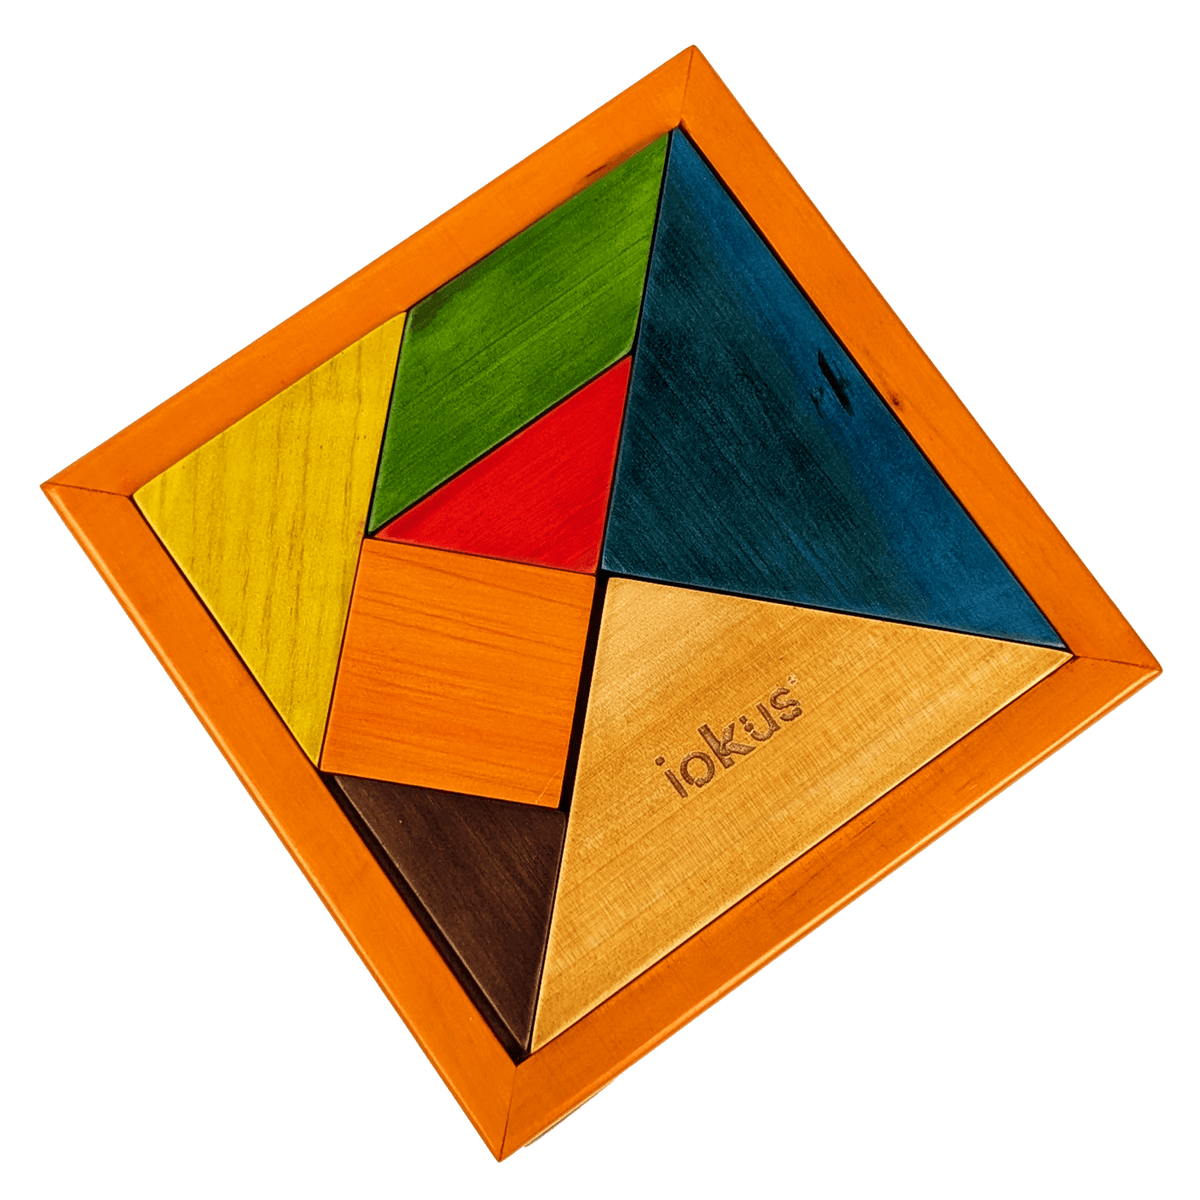 Tangram multicolor madera